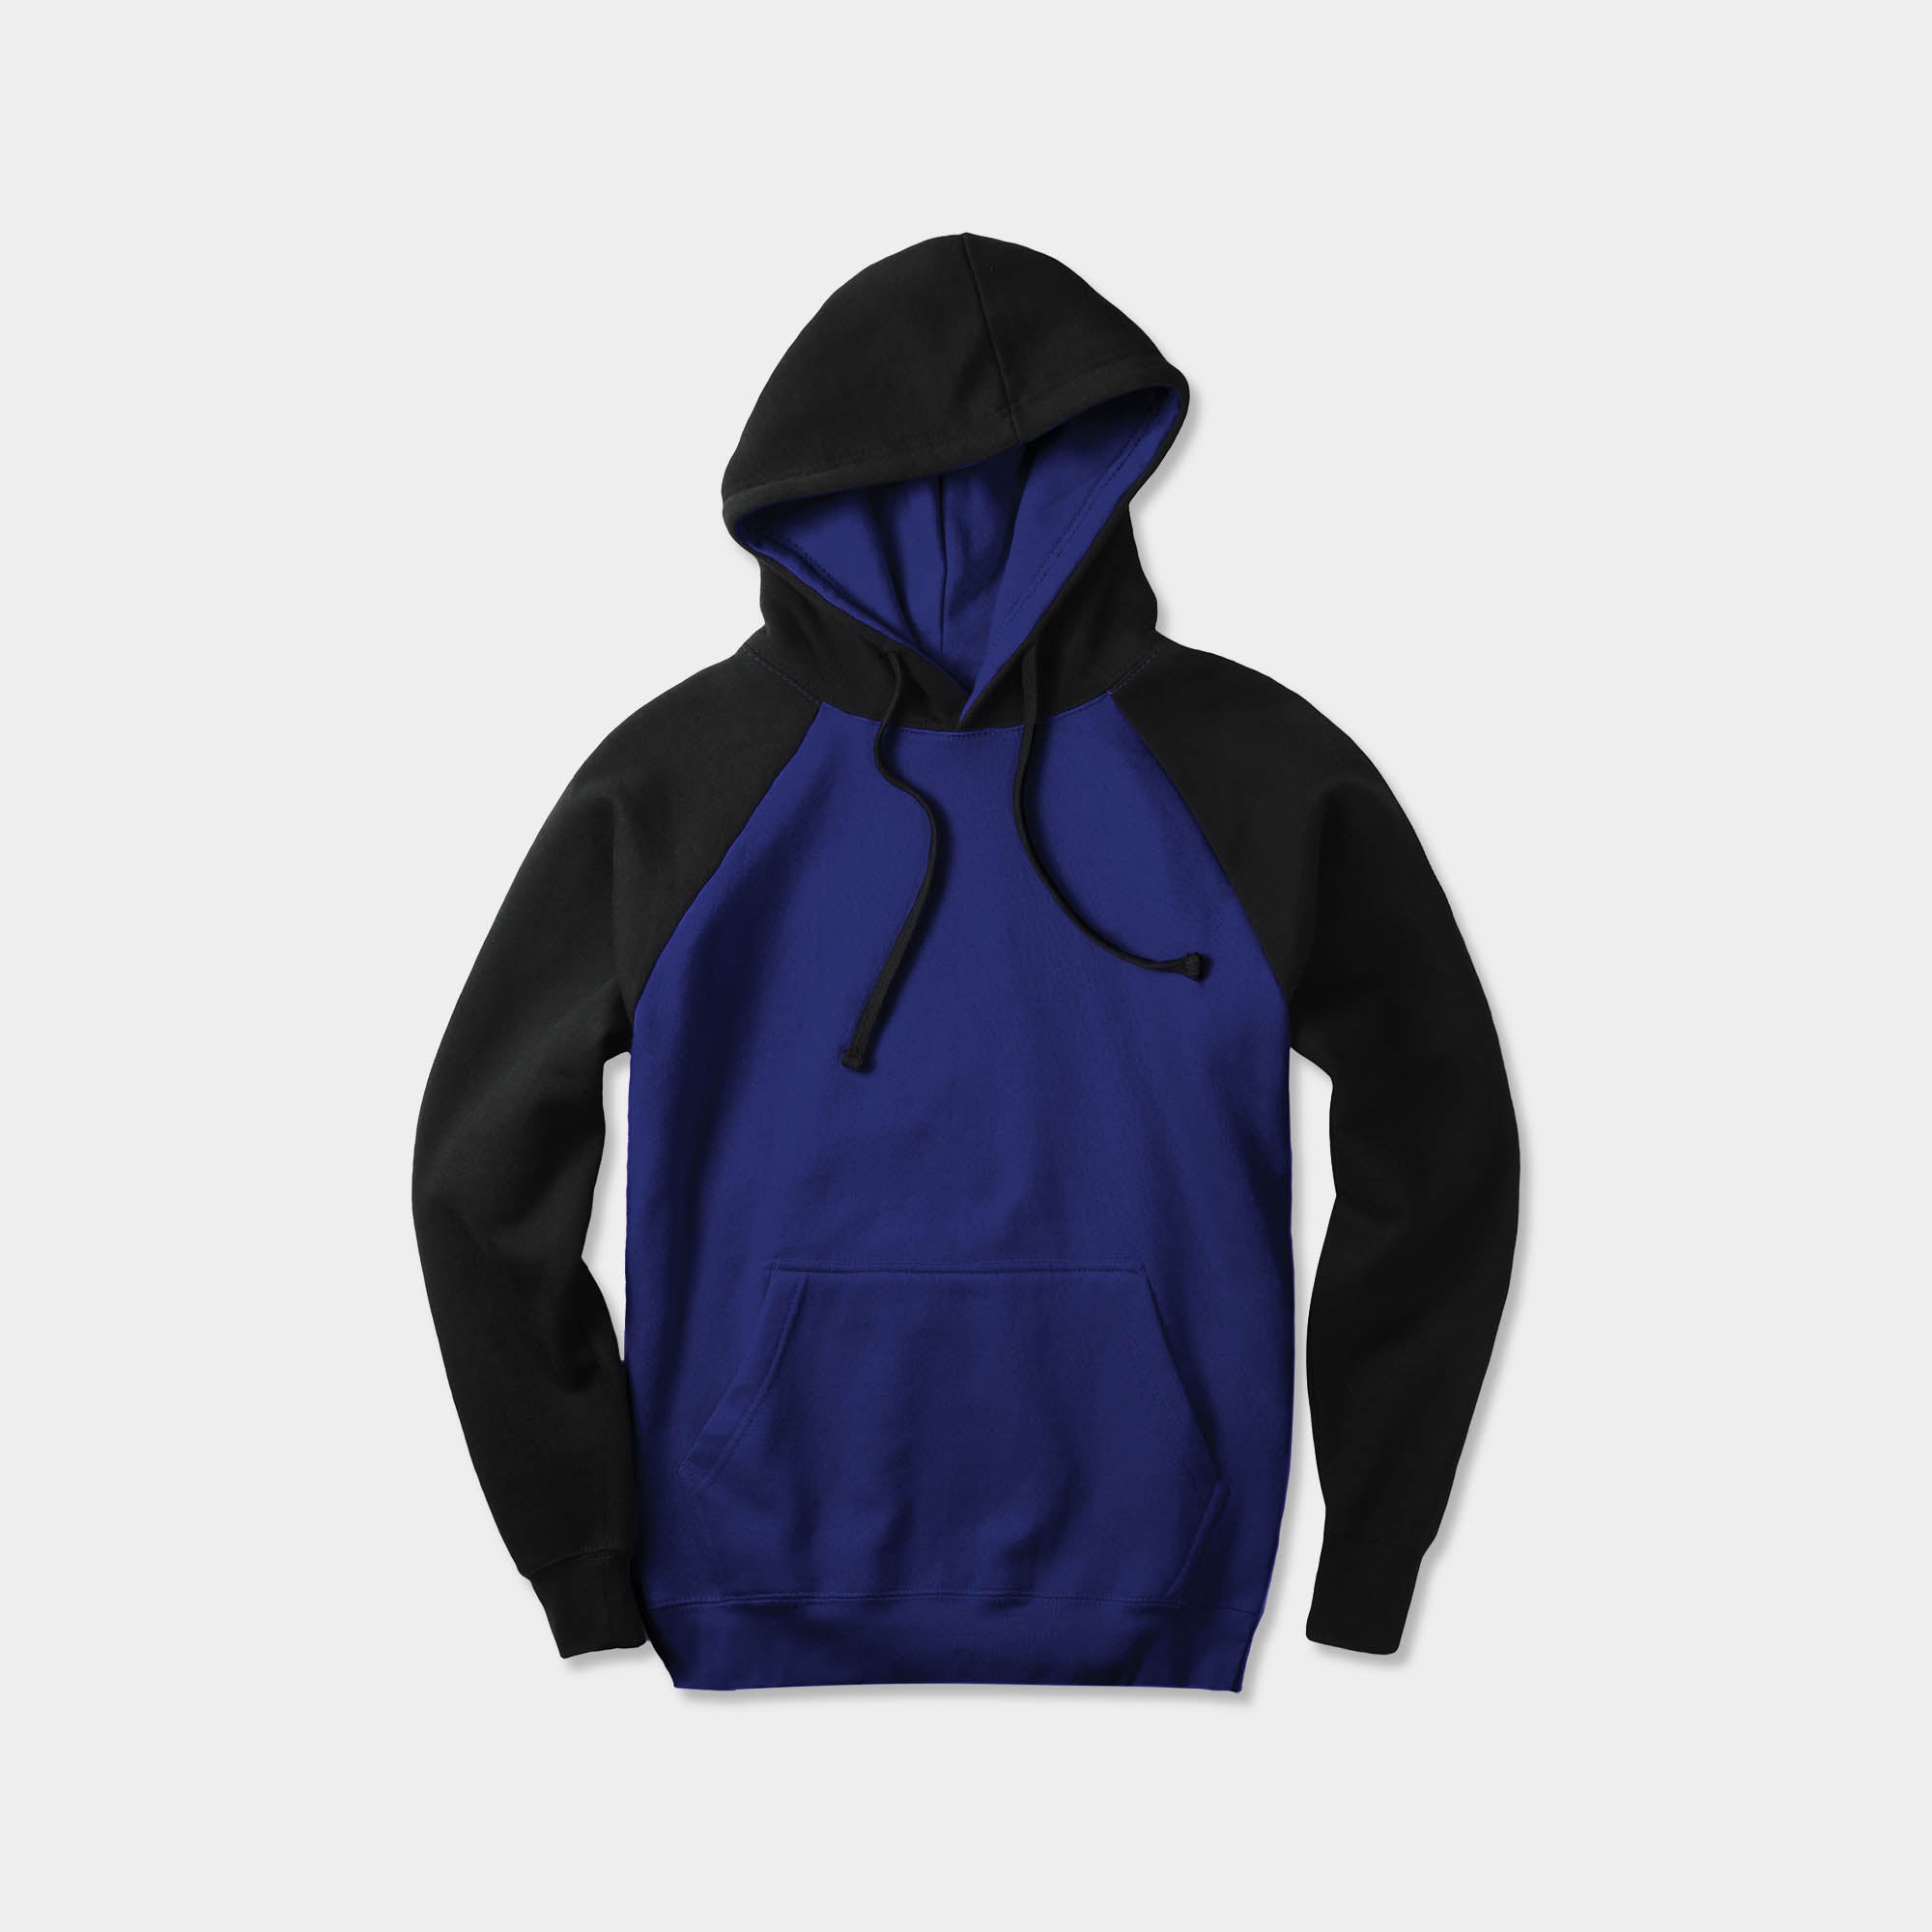 pullover hoodie_mens pullover hoodie_pullover sweatshirt_champion pullover hoodie_pullover adidas_hooded pullover_Royal Caviar/Black